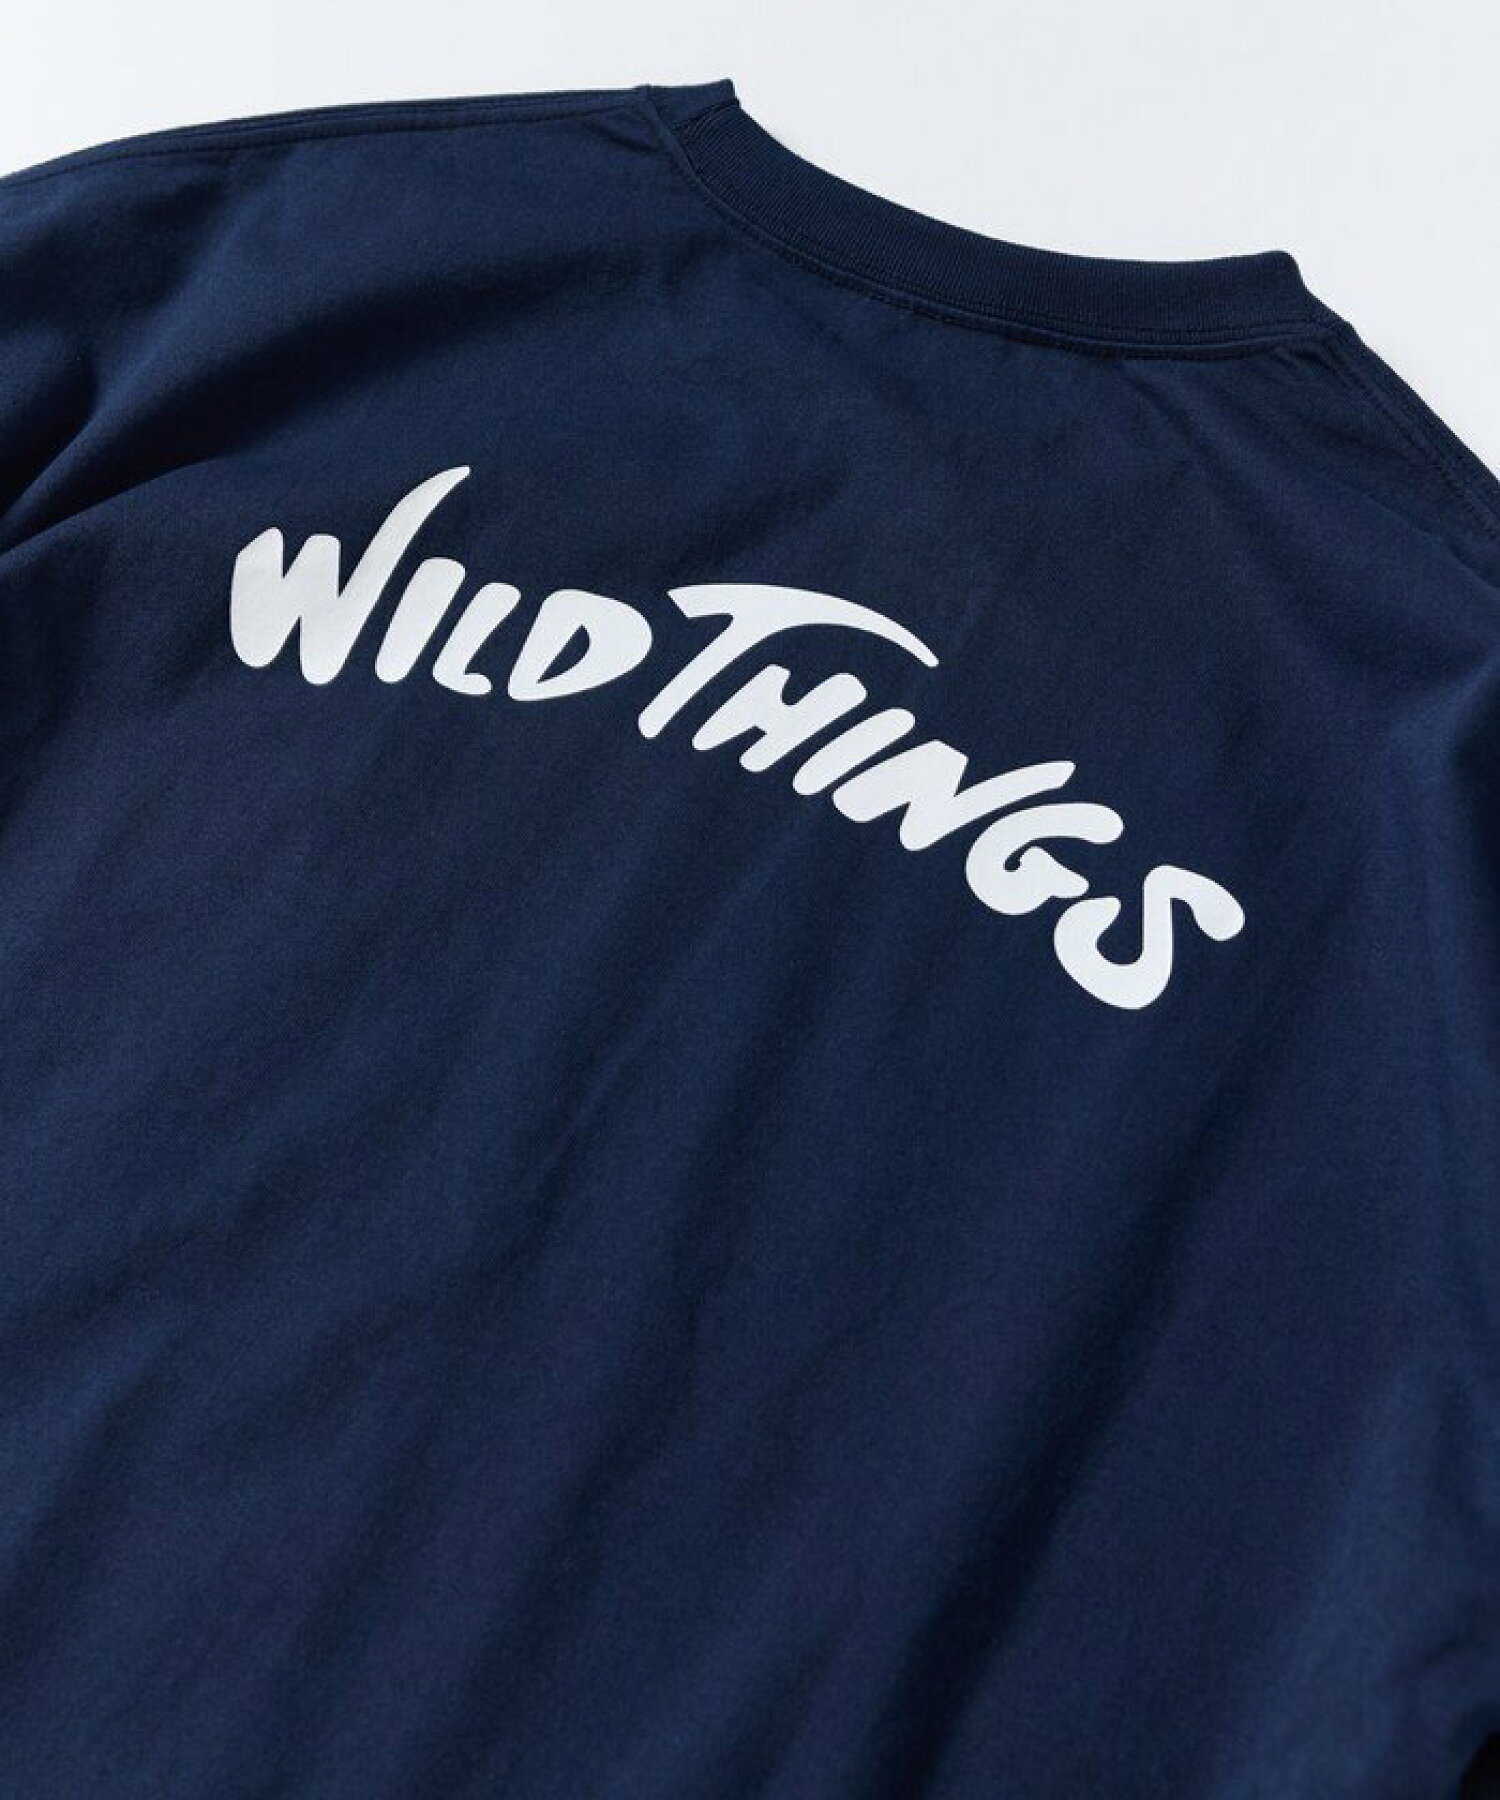 WILD THINGS×FREAK'S STORE / 別注 バックアーチロゴ ワンポイント刺繍 クルーネックポケットTシャツ 【限定展開】